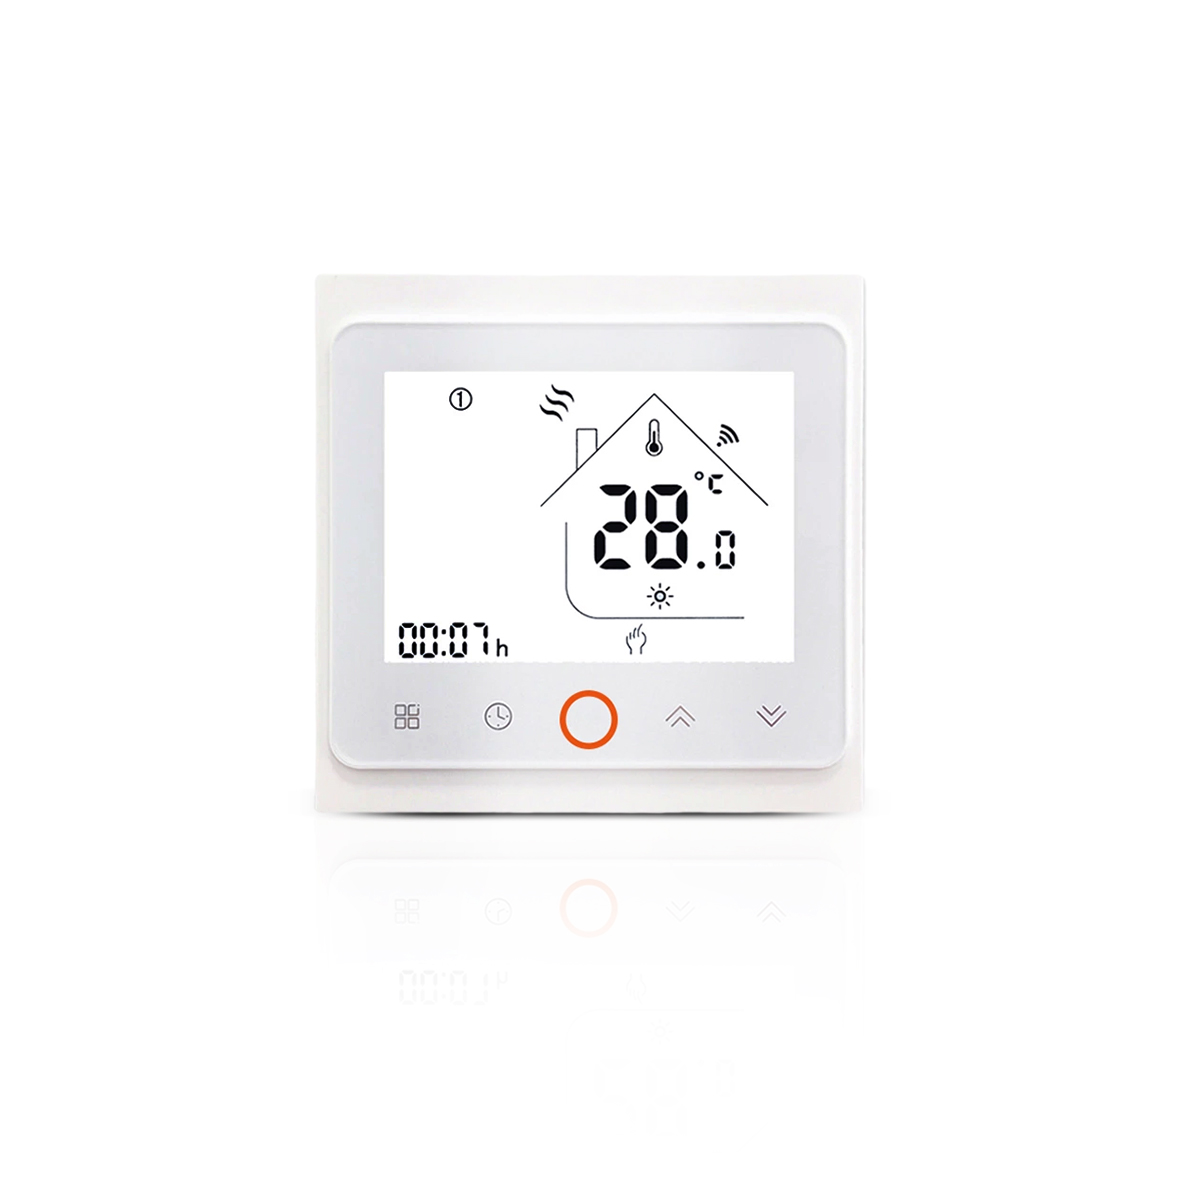 BHT-002 Series Smart Heating Thermostat